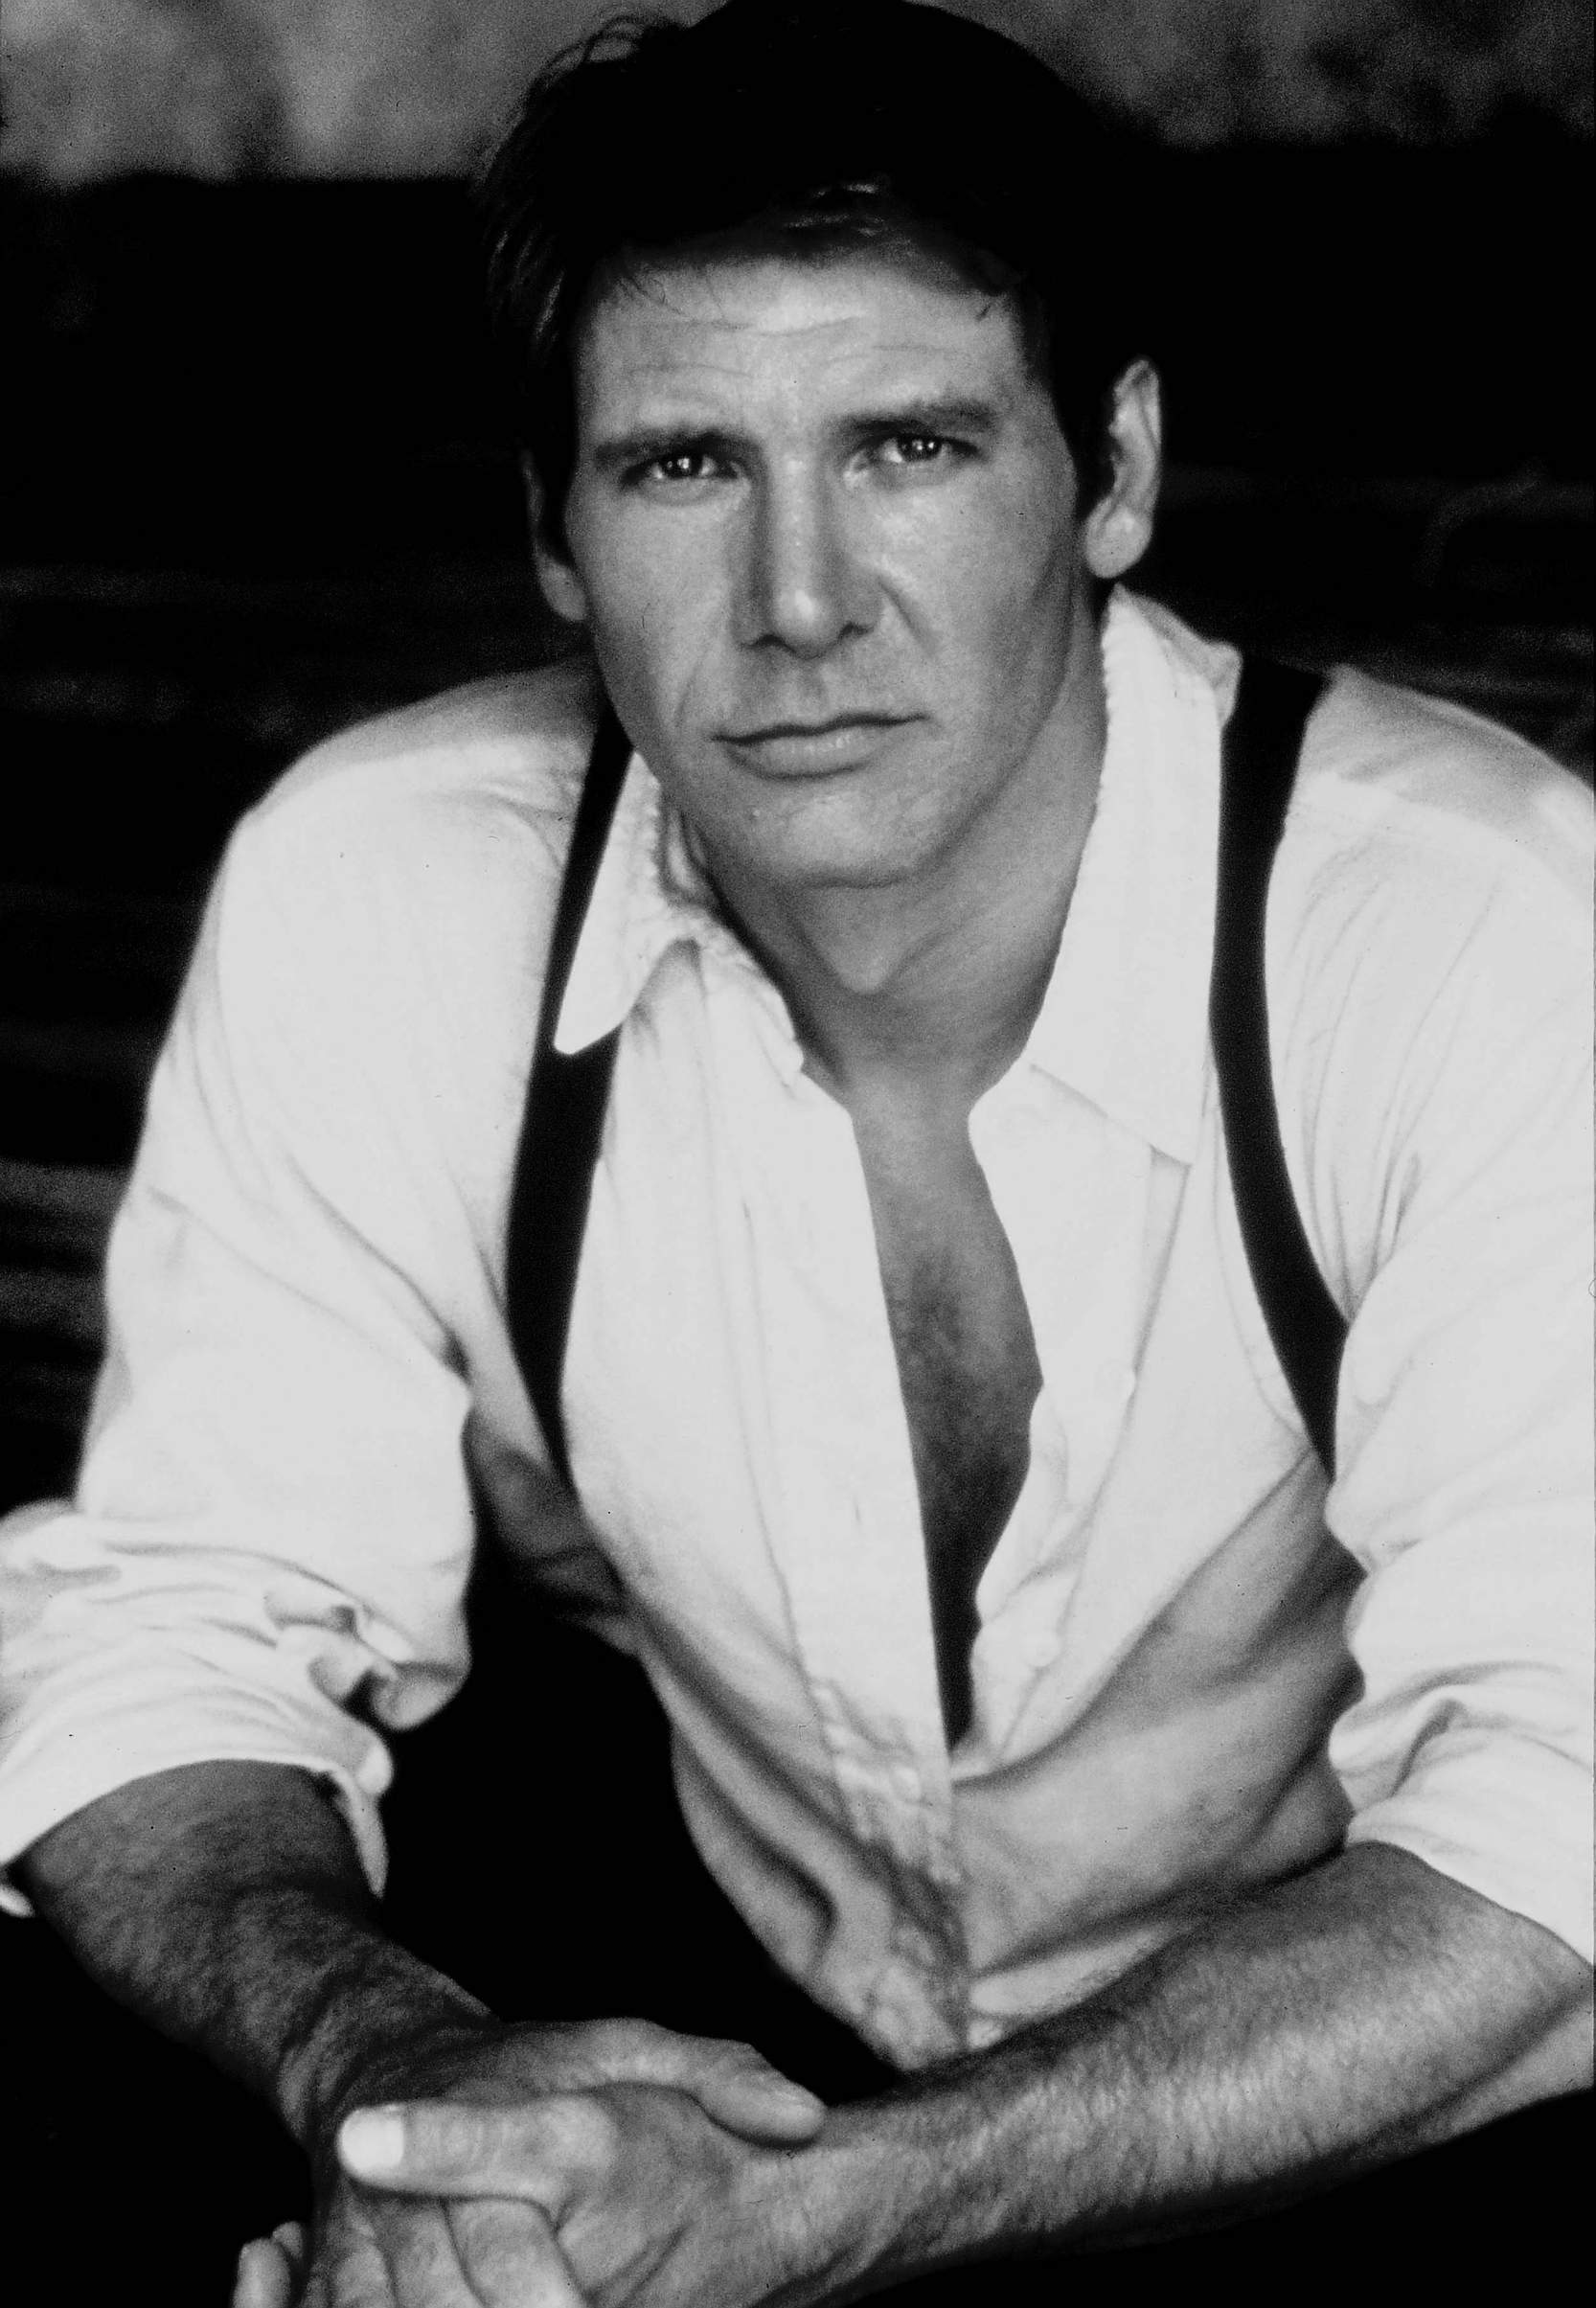 Handsome Irish Men Harrison Ford - American actor